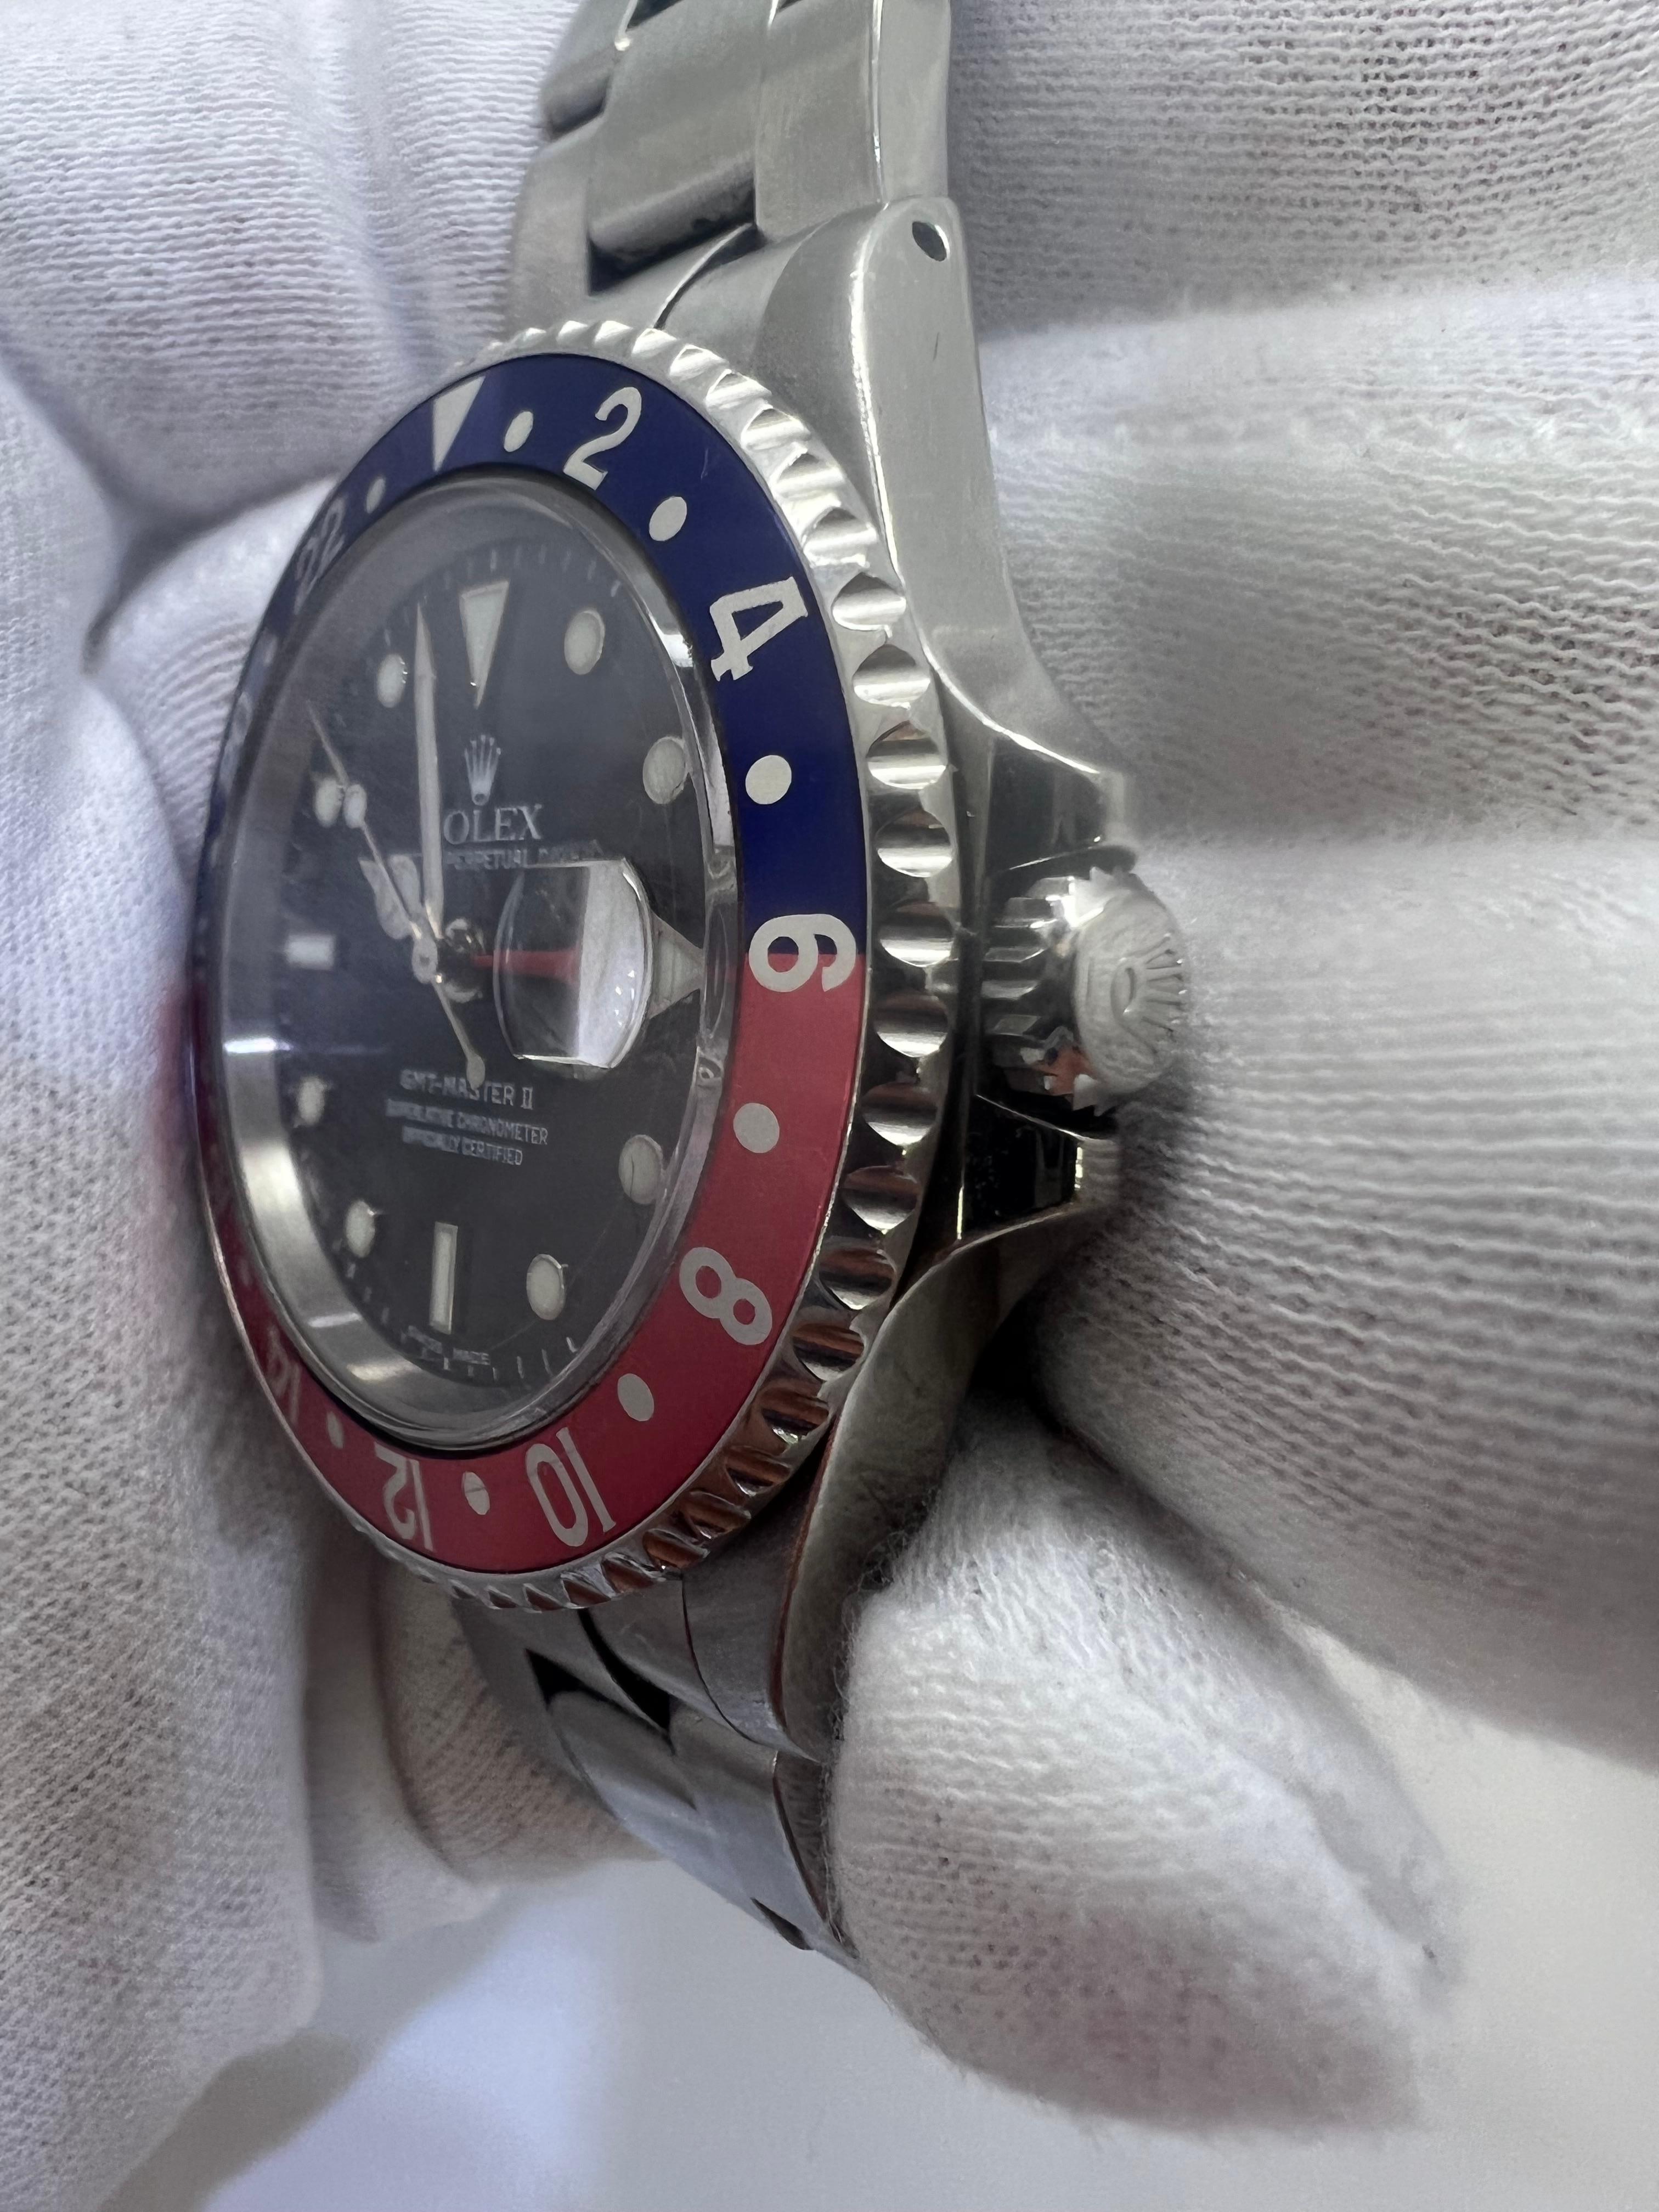 Rolex GMT Master II 16700 Pepsi Men's Watch 2002

all original parts

comes with original Rolex Box and paperwork

excellent condition!

runs perfect!

shop with confidence

Evita Diamonds